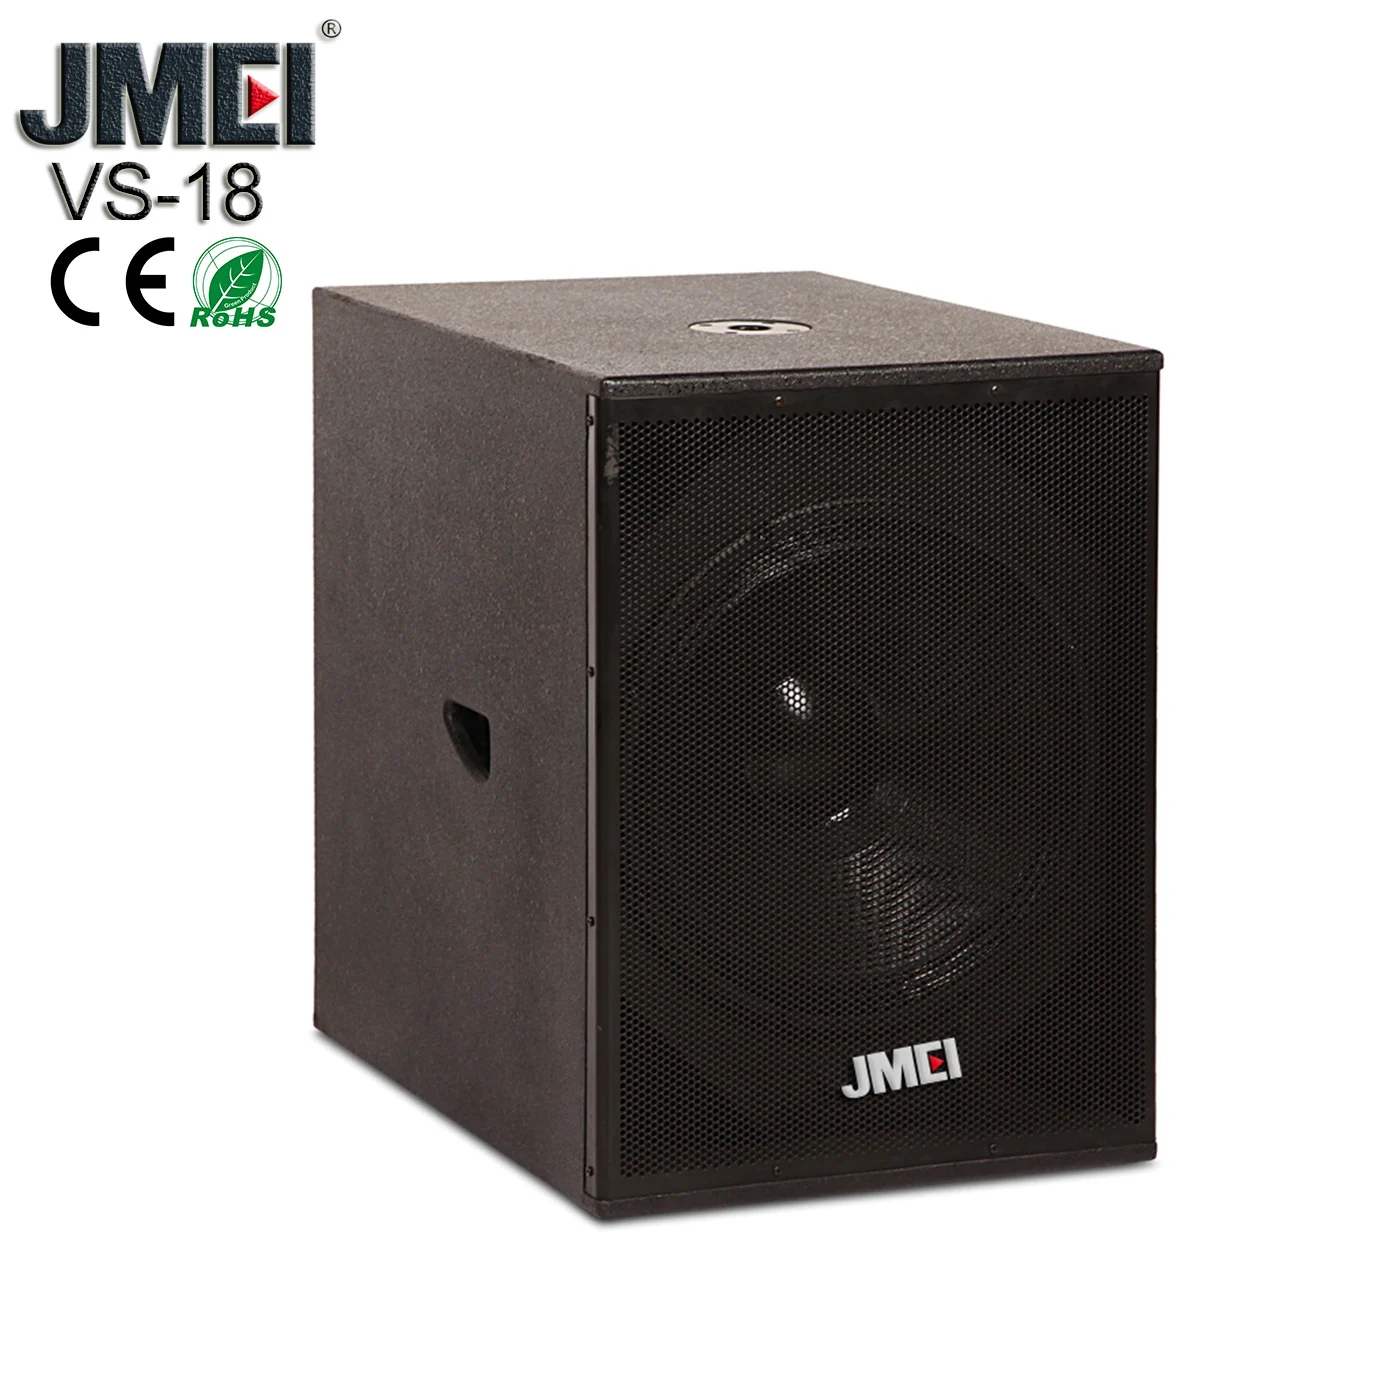 box speaker 12 inch subwoofer